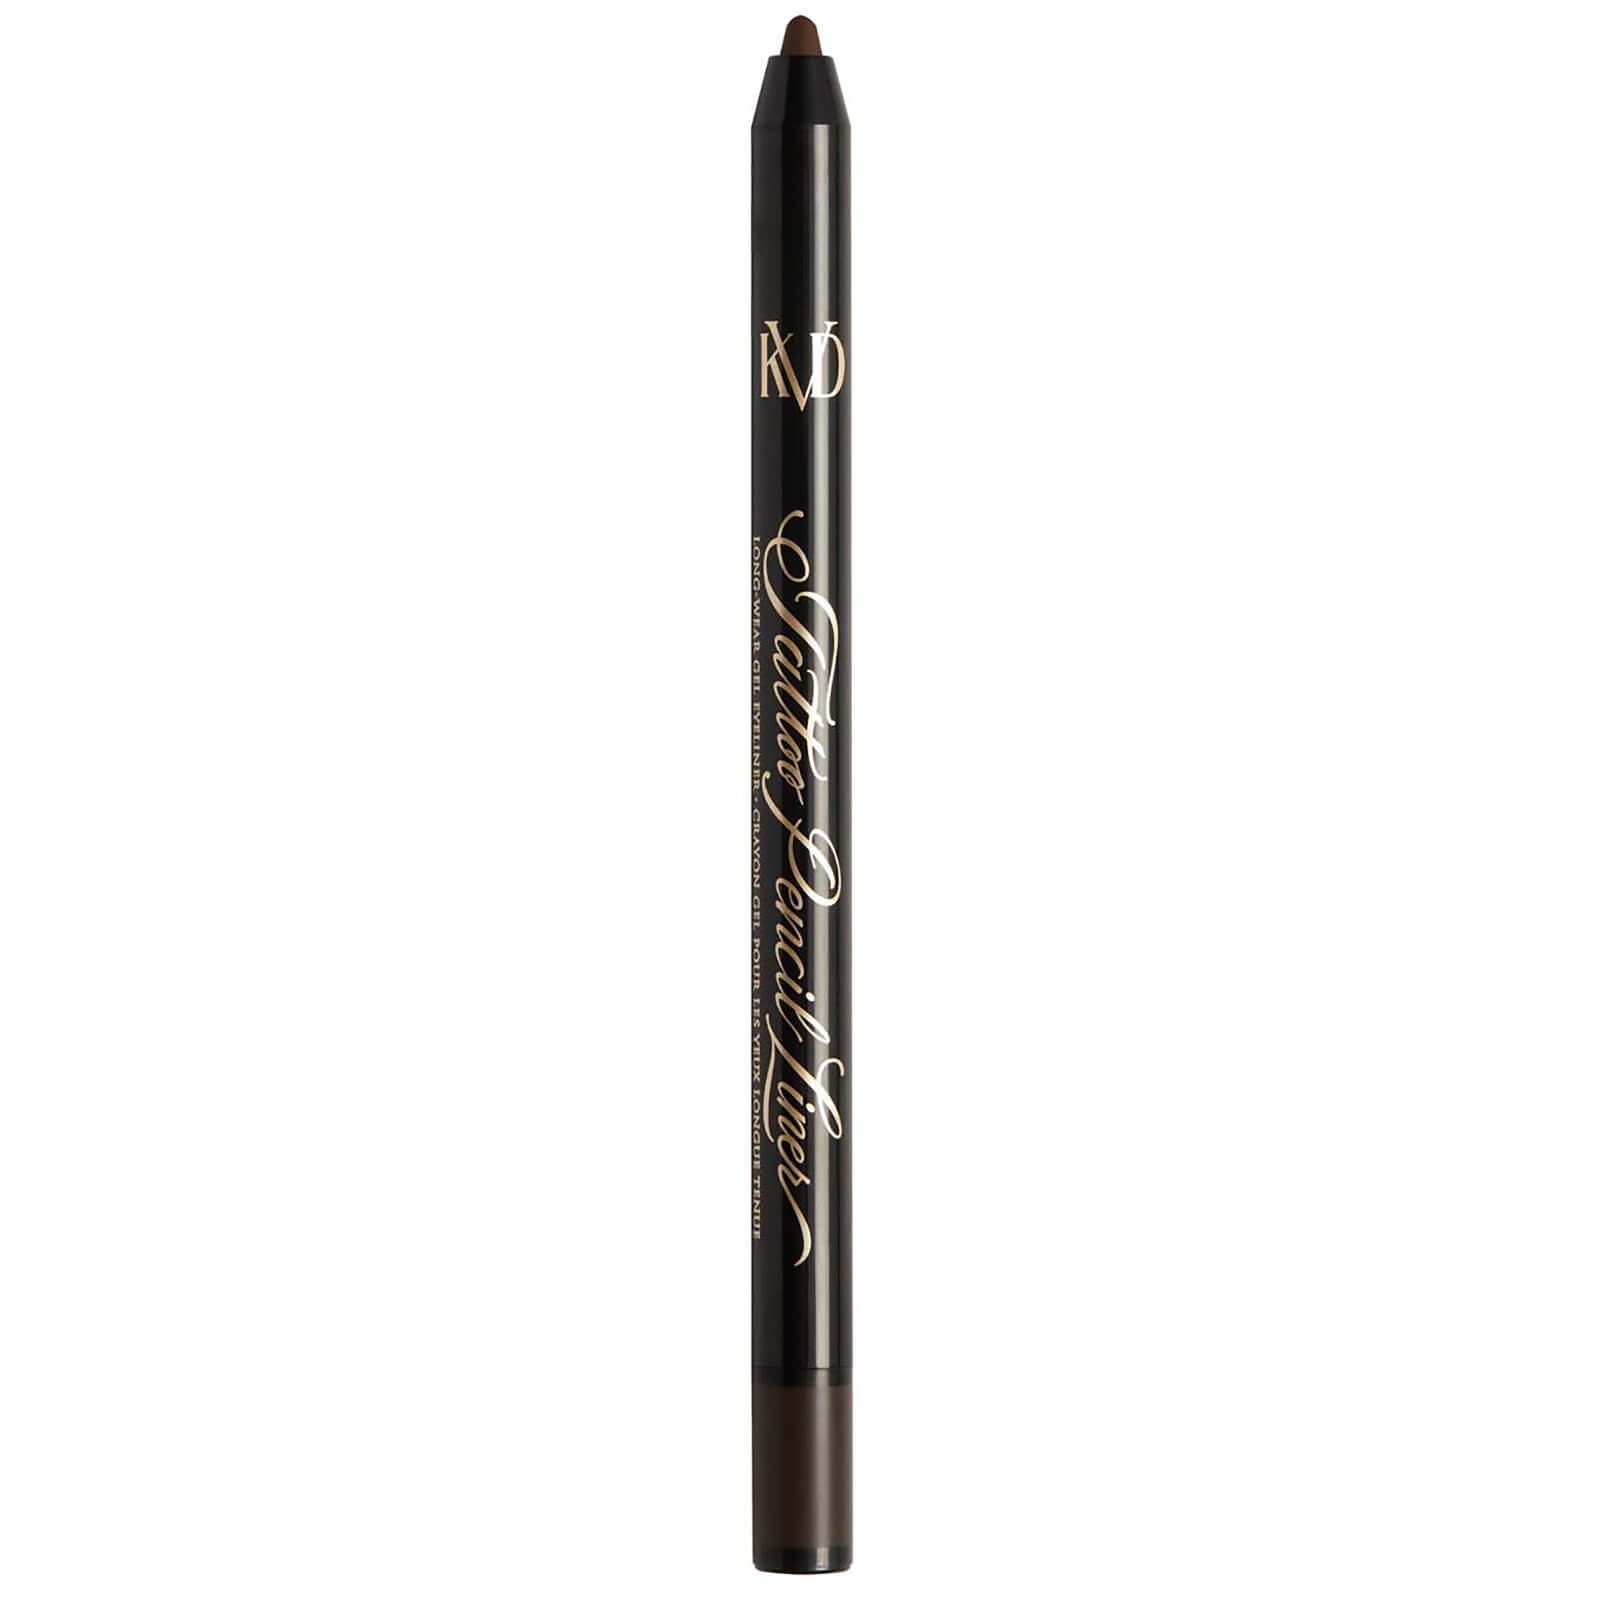 KVD Beauty Tattoo Pencil Liner Long-Wear Gel Eyeliner 0.5g (Various Shades) - Pyrolusite Brown